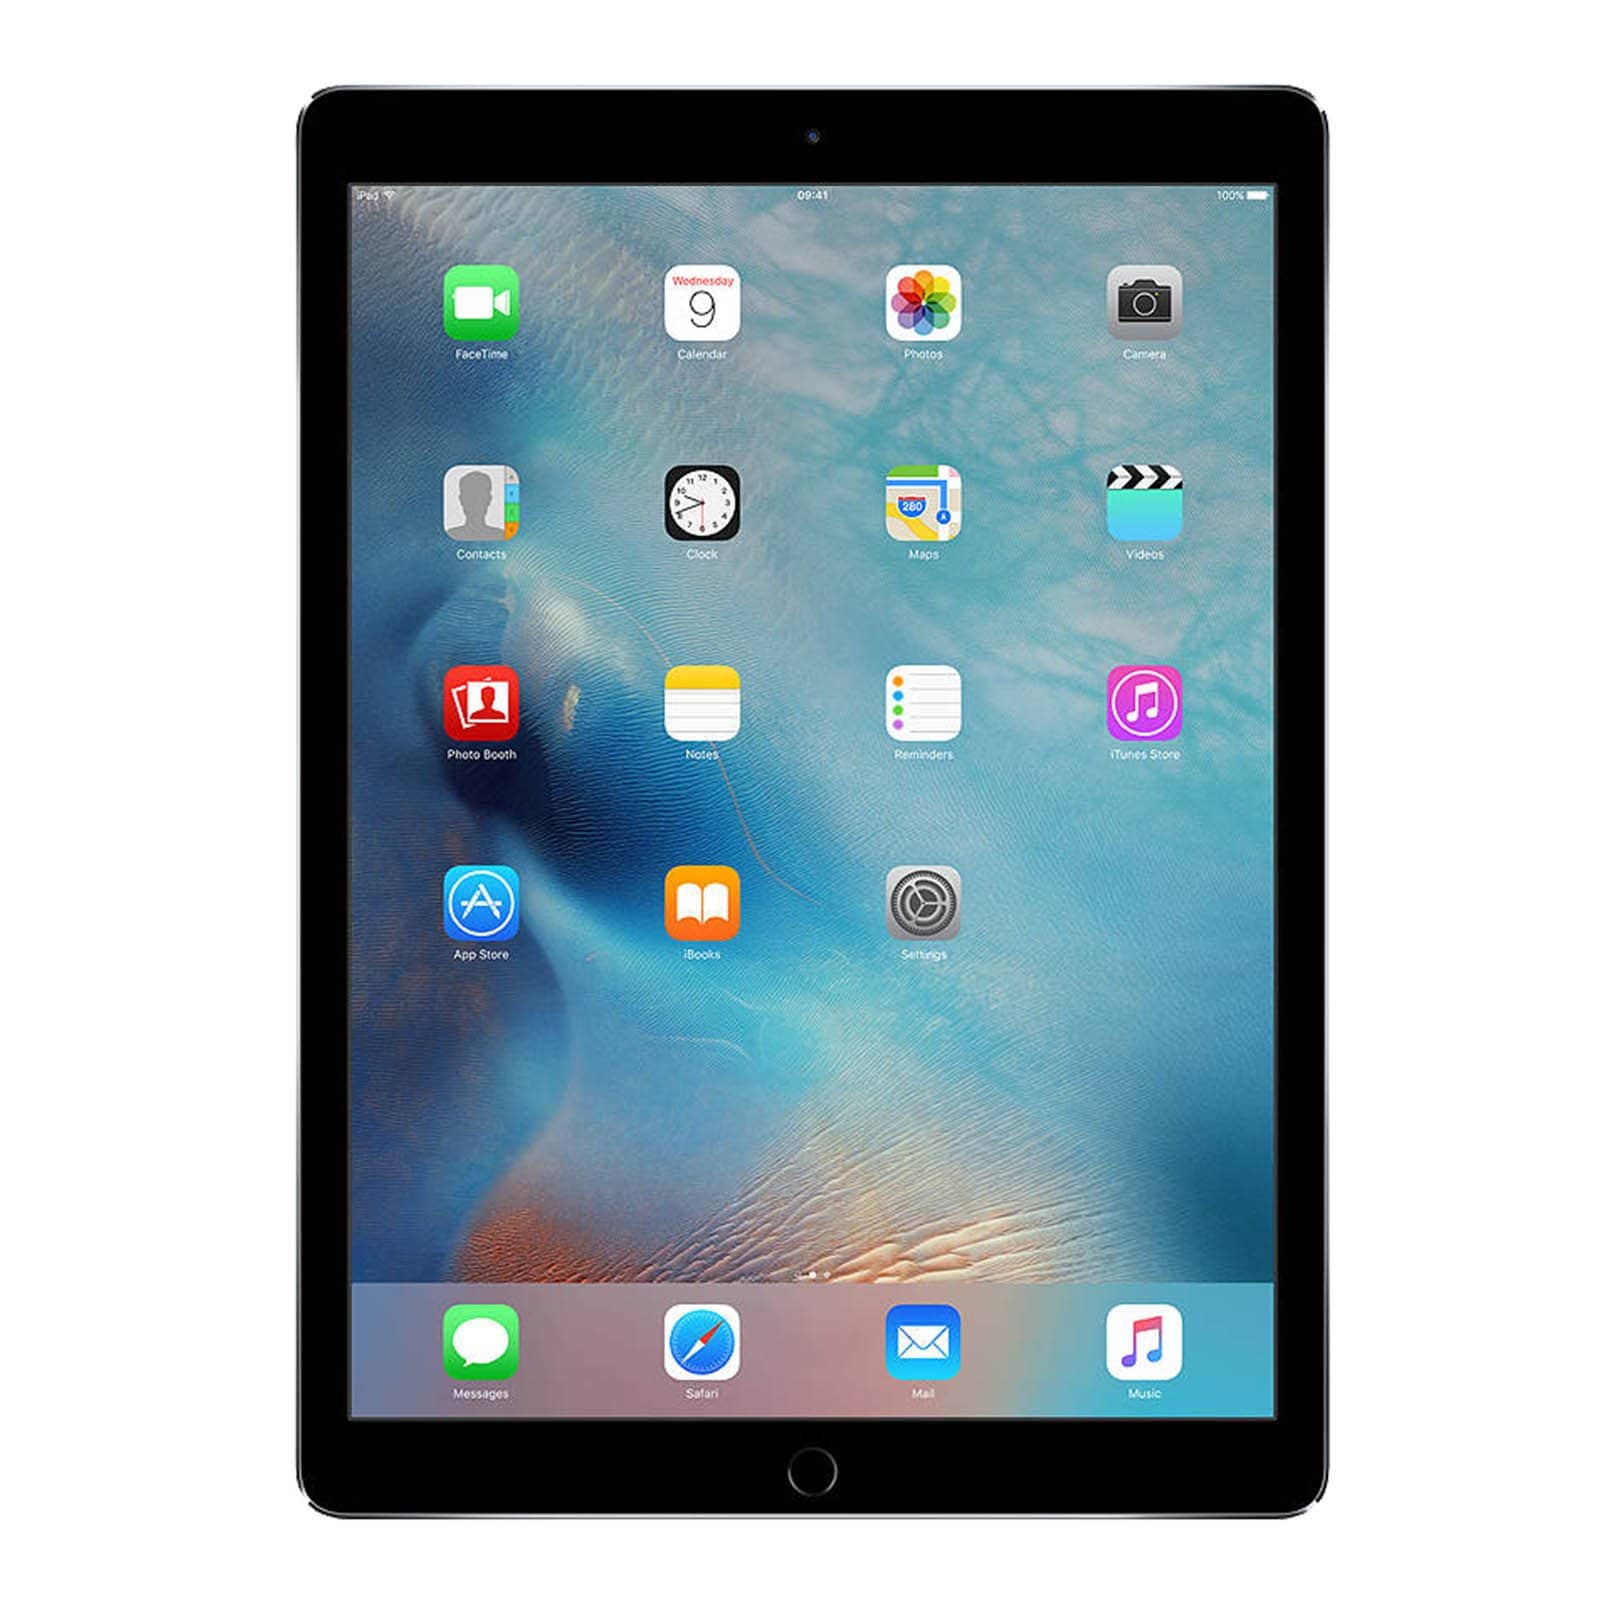 iPad Pro 12.9 Inch 1st Gen 32GB Space Grey Good - Unlocked